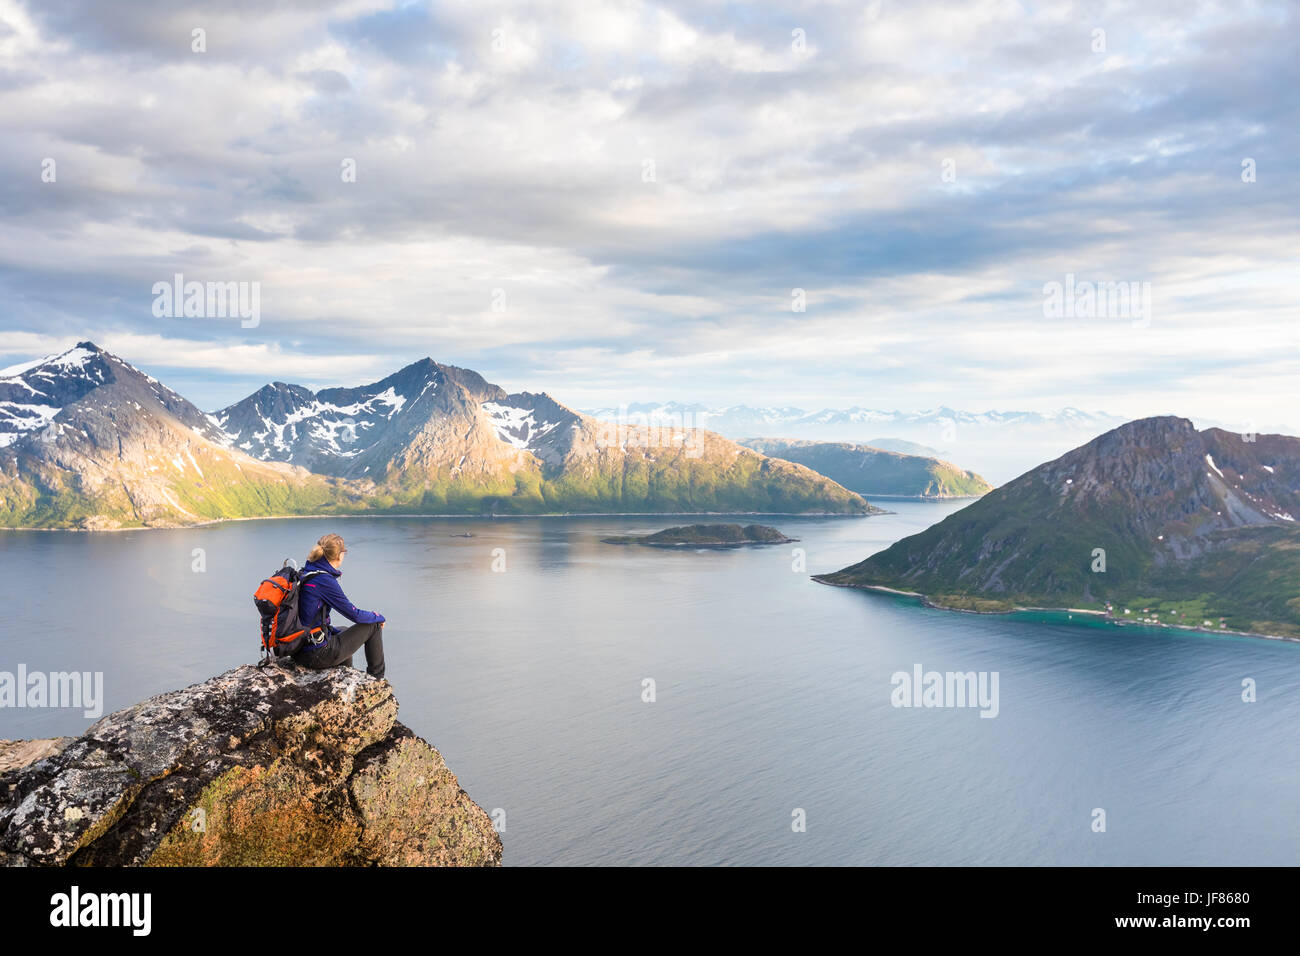 https://c8.alamy.com/comp/JF8680/woman-hiker-looking-at-a-beautiful-norwegian-fjord-landscape-JF8680.jpg